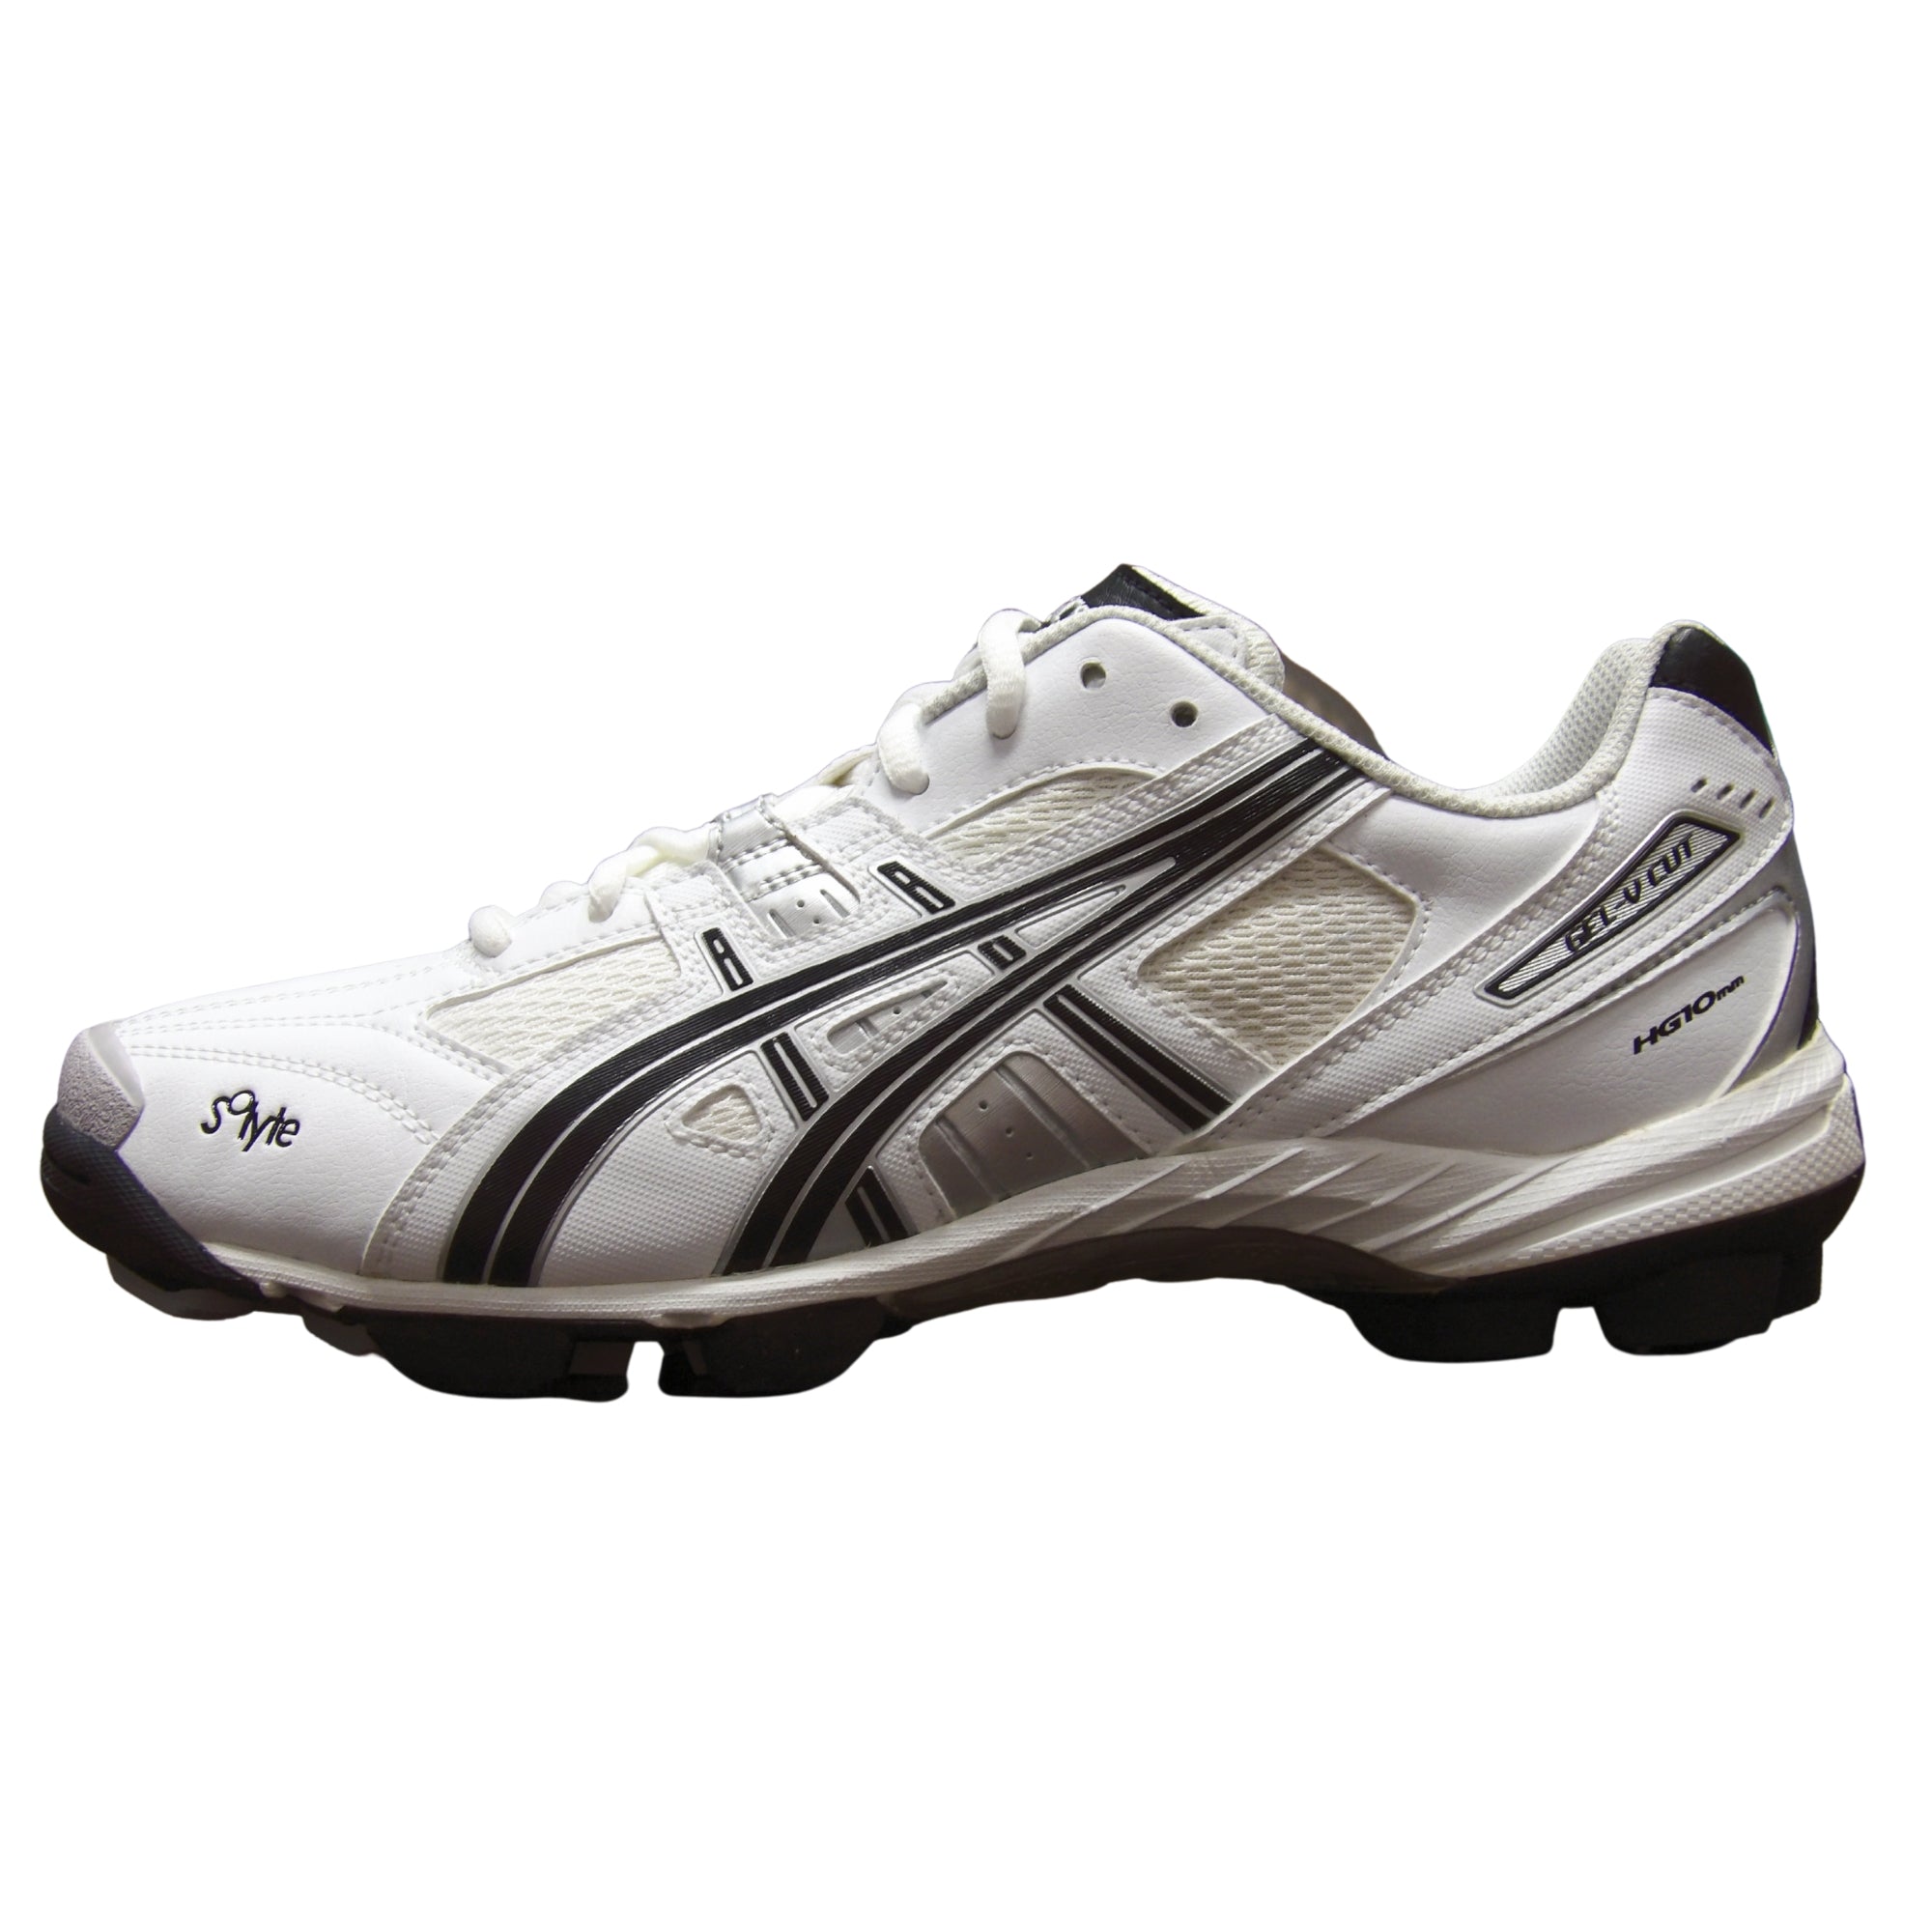 Asics Cricket Shoes, Model Gel V-Cut - White/Black/Silver